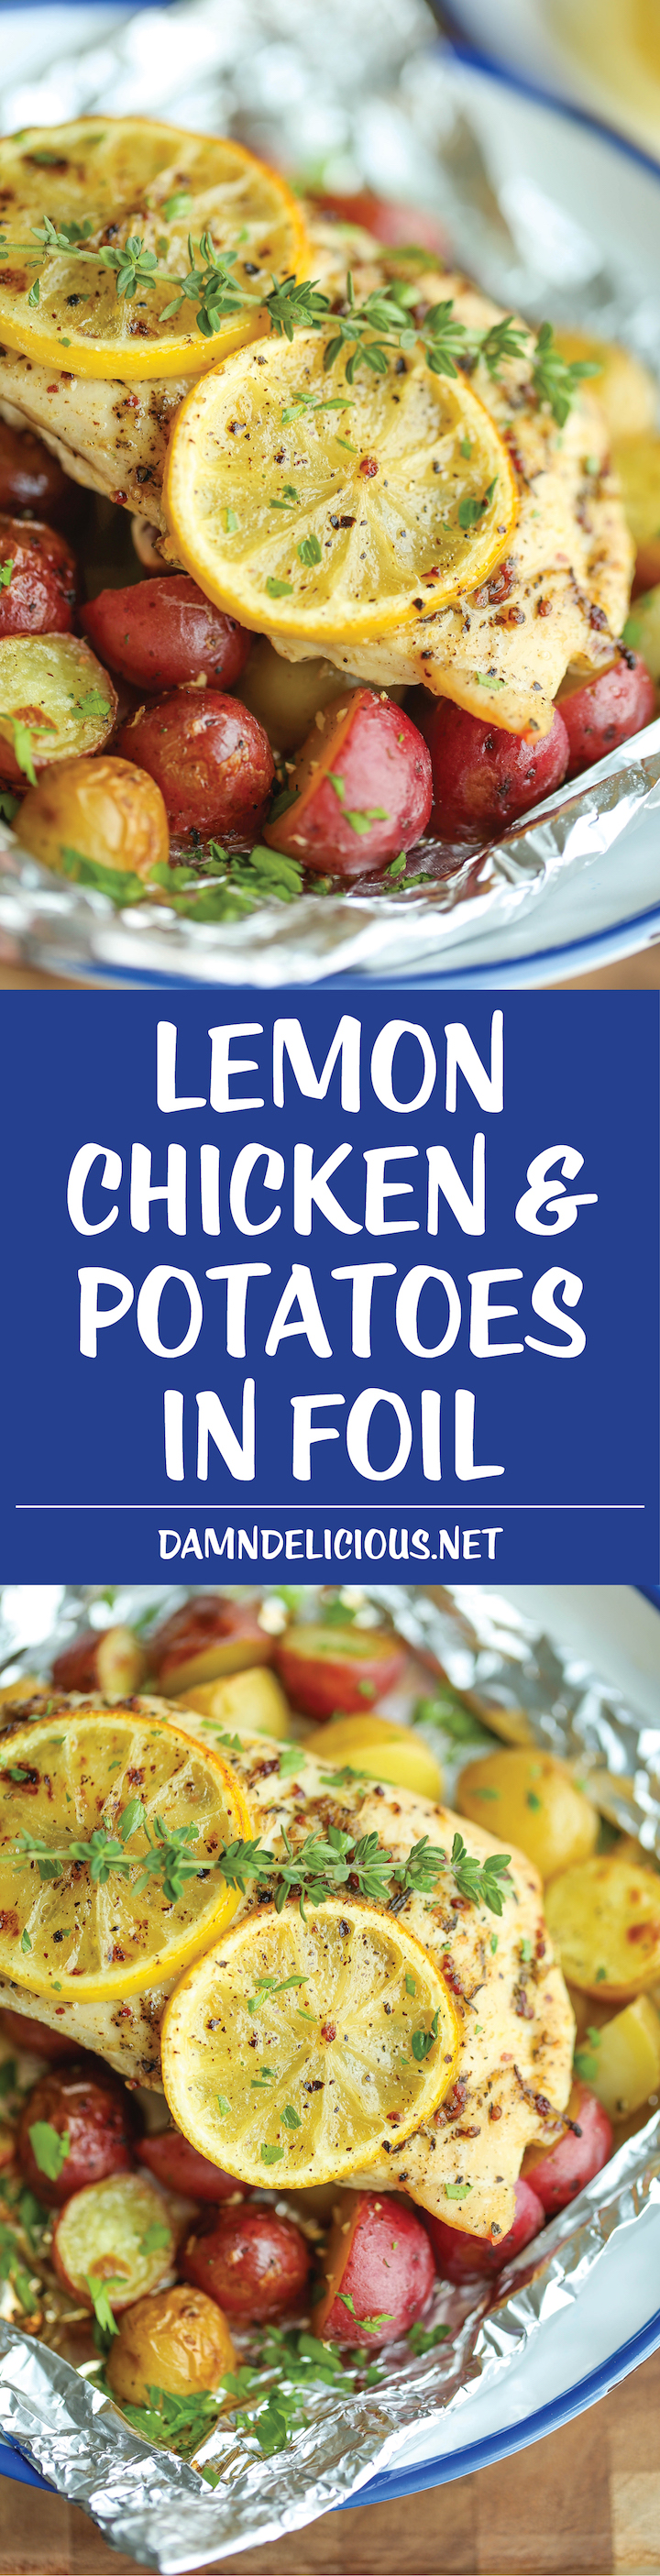 https://s23209.pcdn.co/wp-content/uploads/2015/06/Lemon-Chicken-and-Potatoes-in-Foil-1.jpg